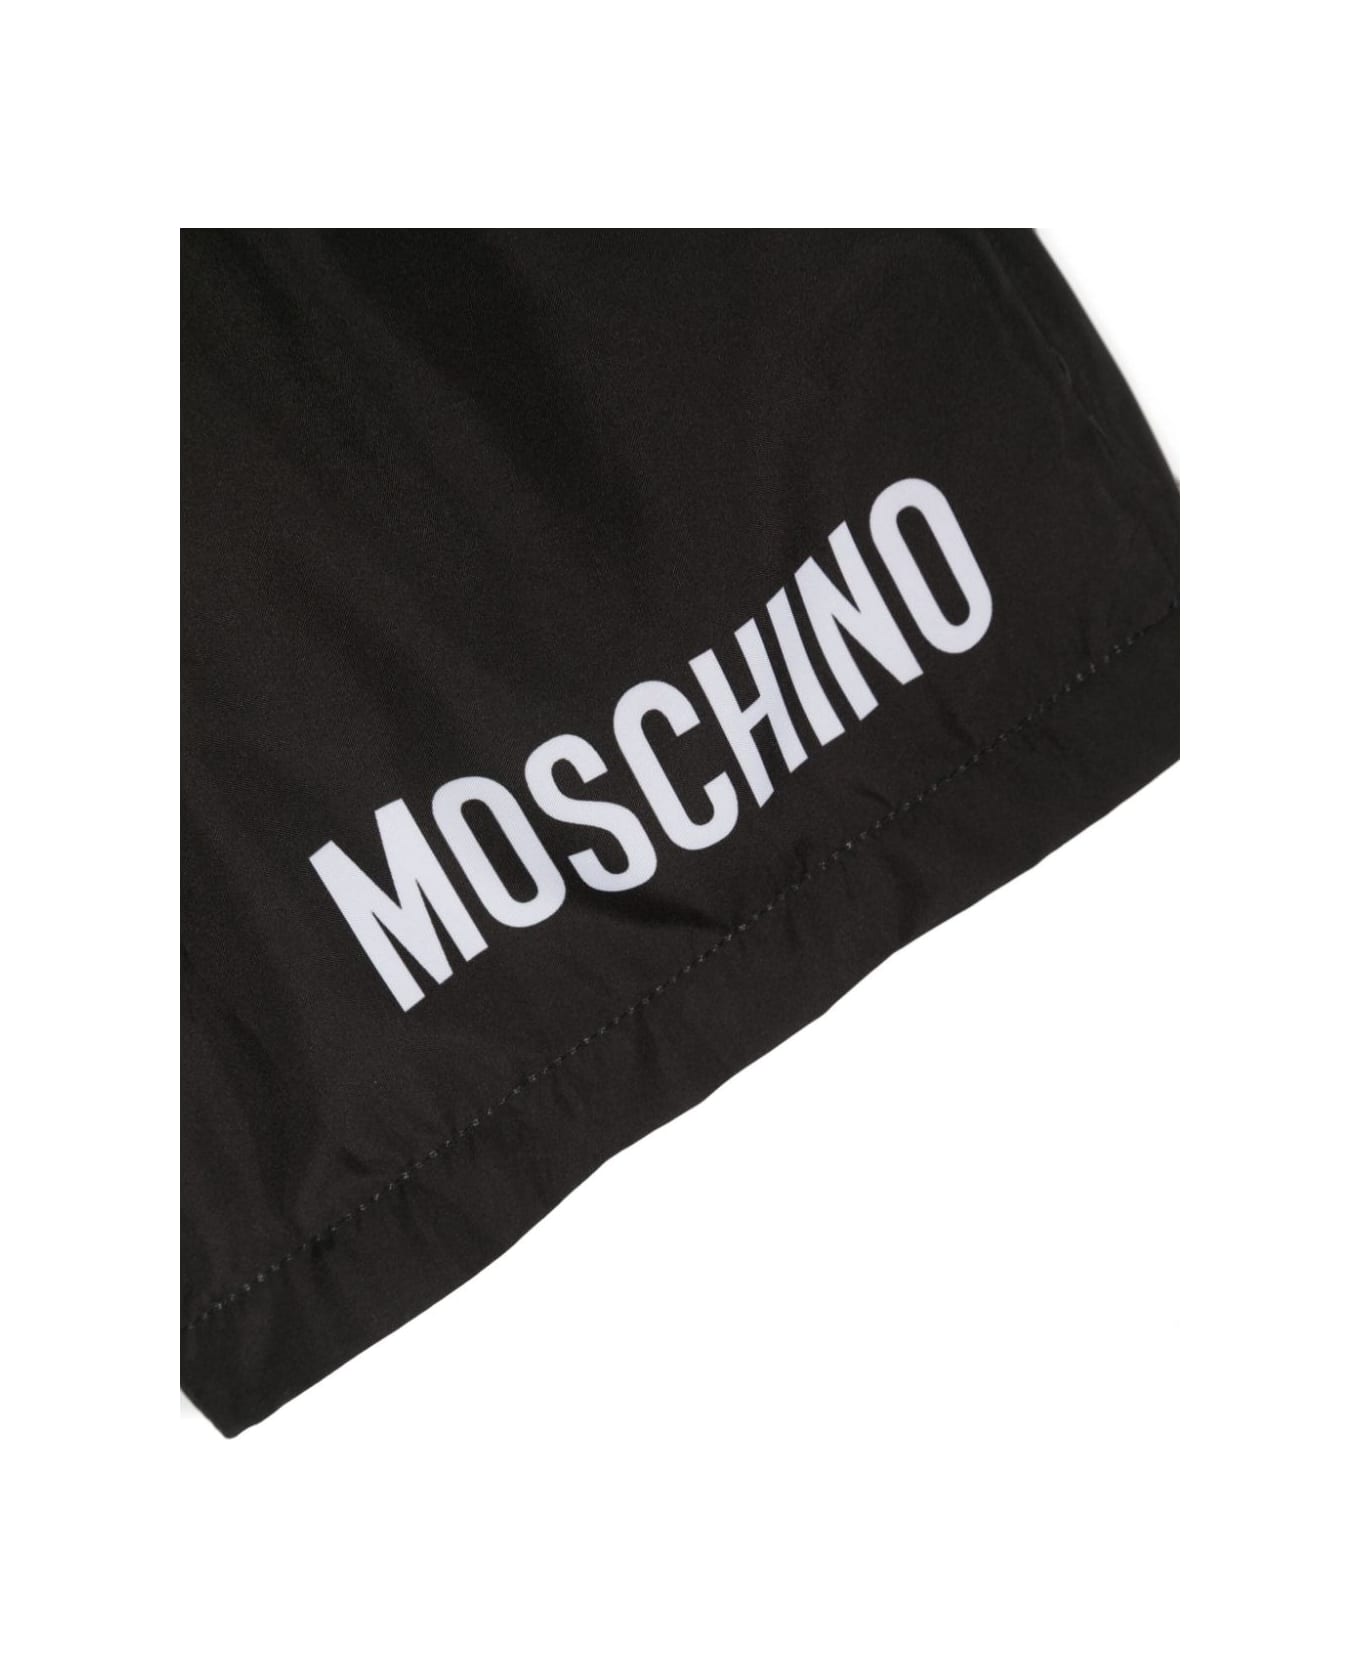 Moschino Black Swimwear With Logo - Black 水着